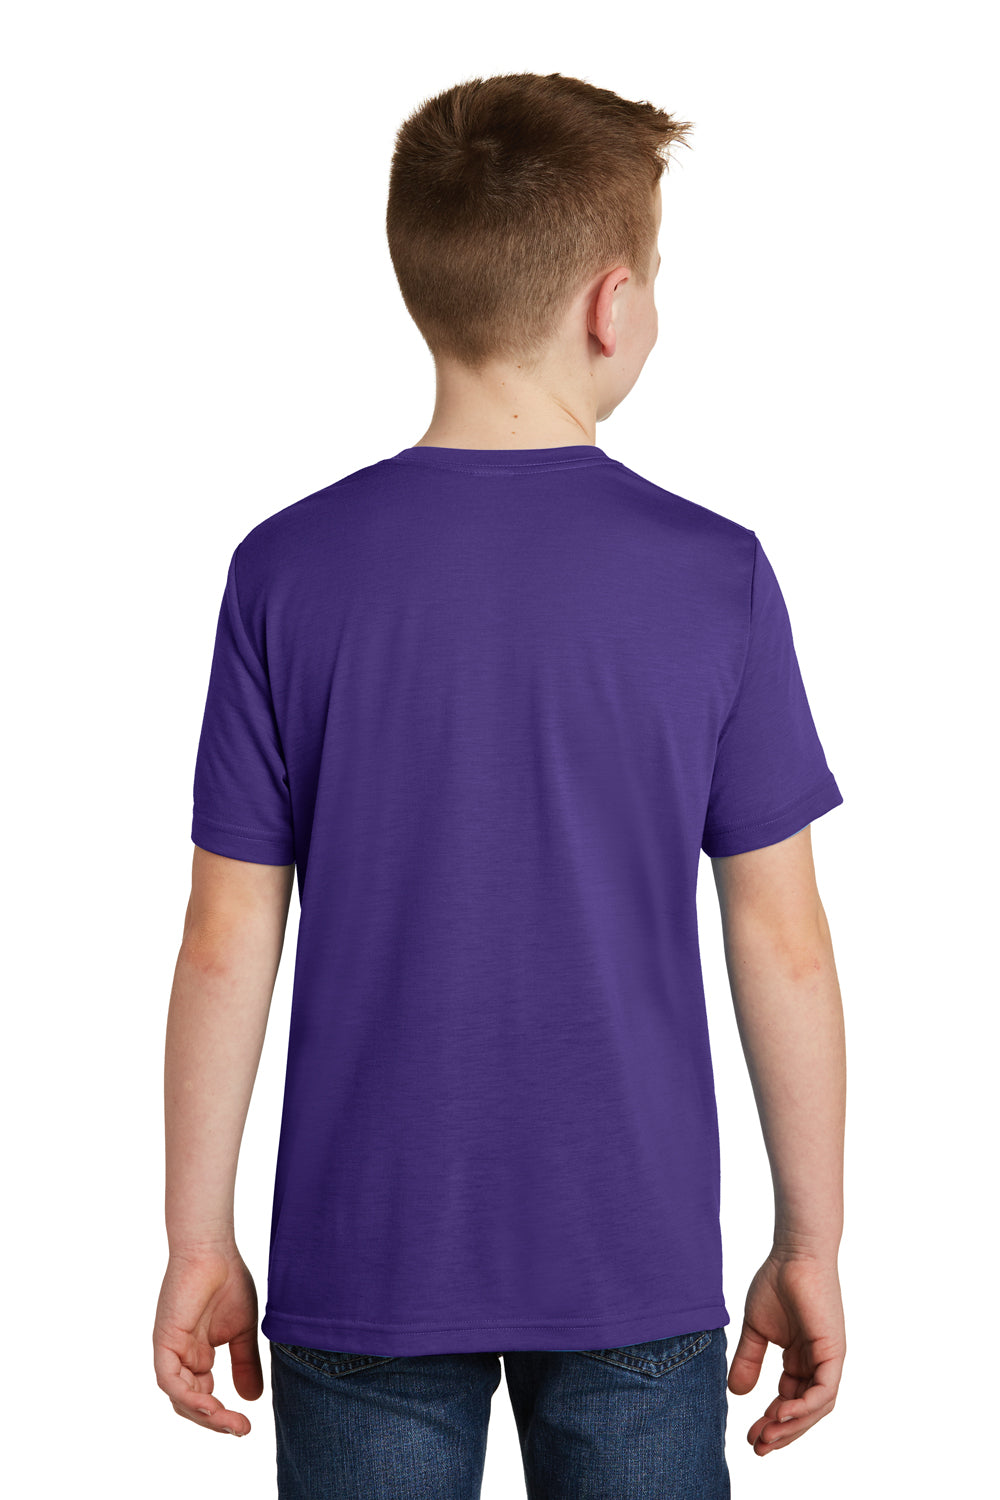 Sport-Tek YST450 Youth Competitor Moisture Wicking Short Sleeve Crewneck T-Shirt Purple Back